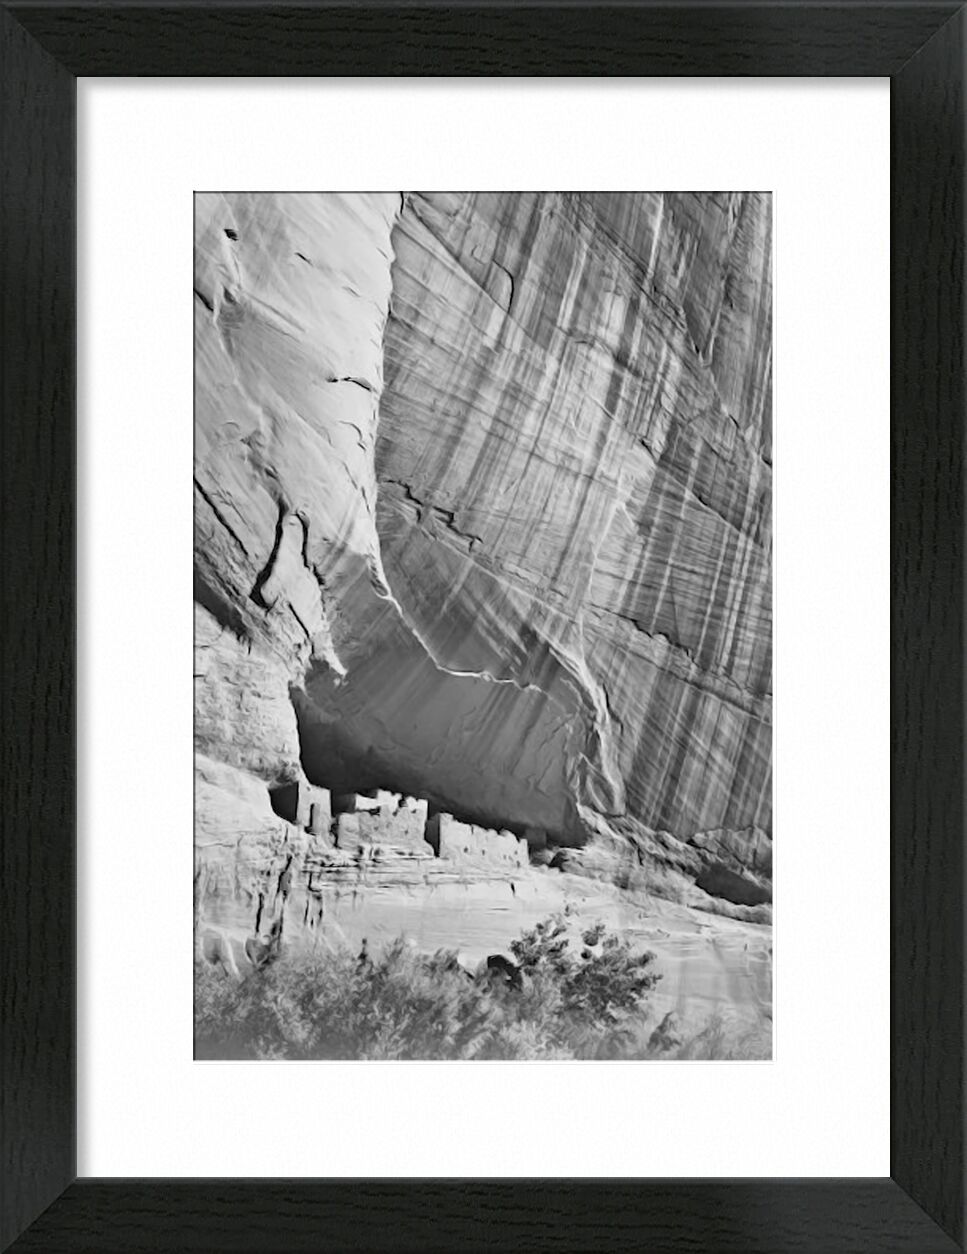 View From River Valley "Canyon De Chelly" National Monument Arizona - Ansel Adams von Bildende Kunst, Prodi Art, ANSEL ADAMS, Tal, schwarz & weiß, Berge, Klippe